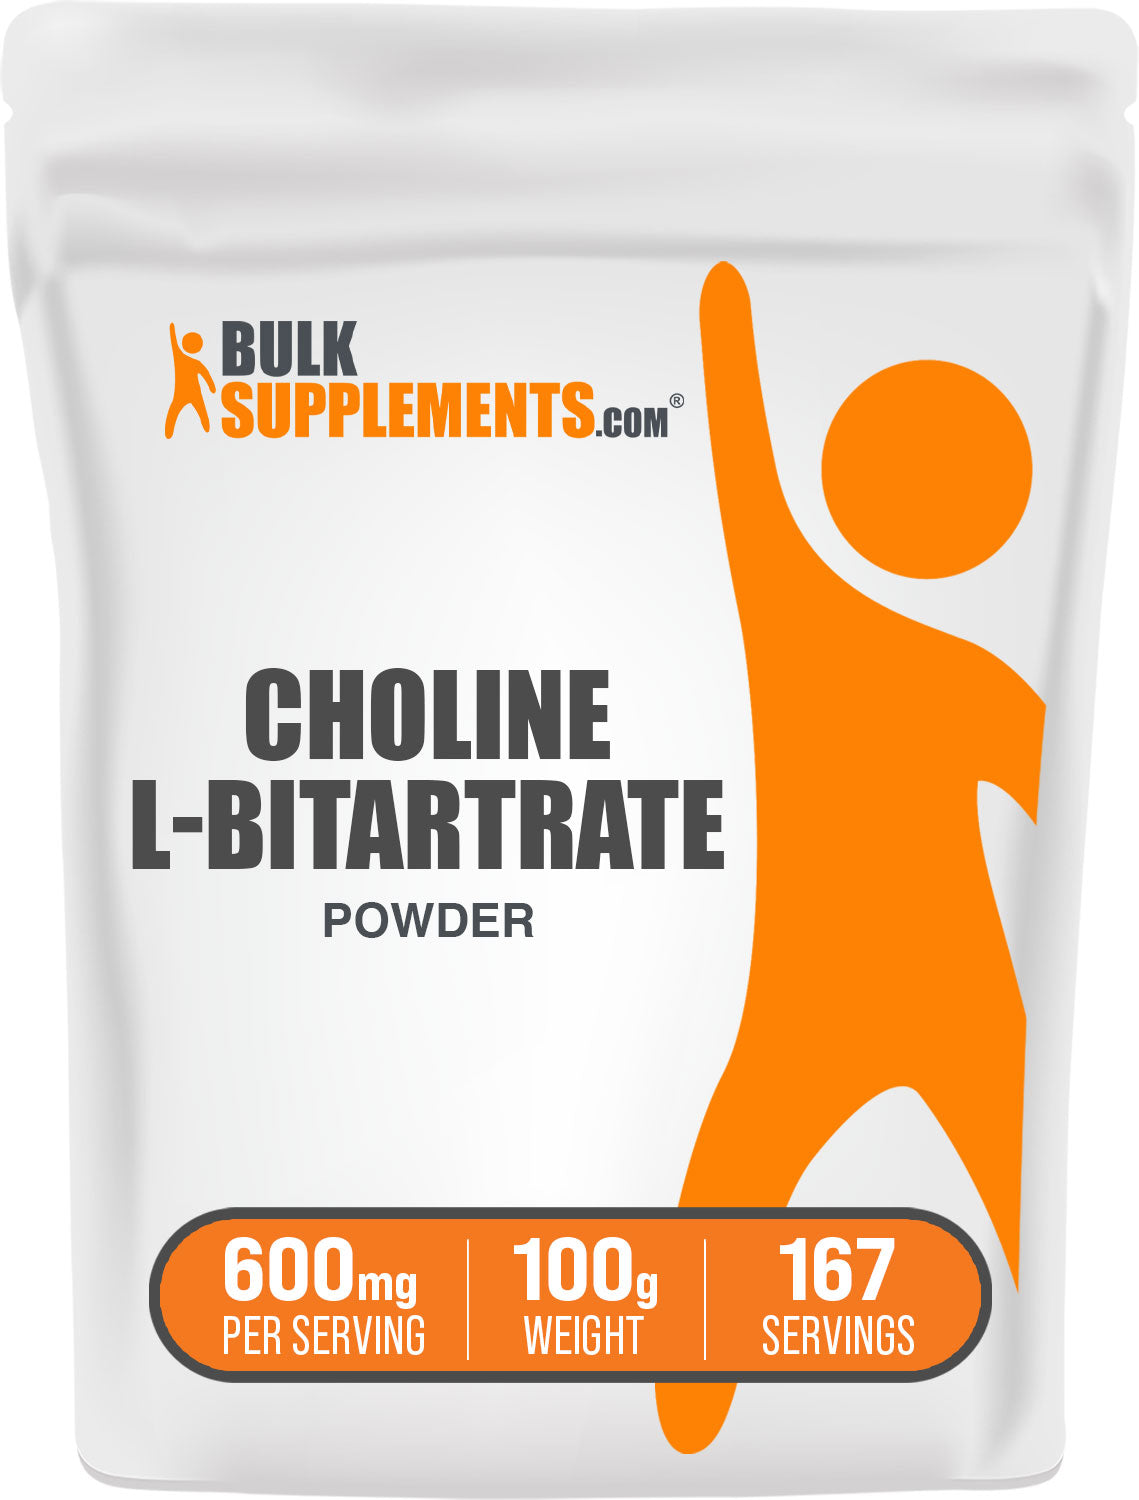 100g choline supplements